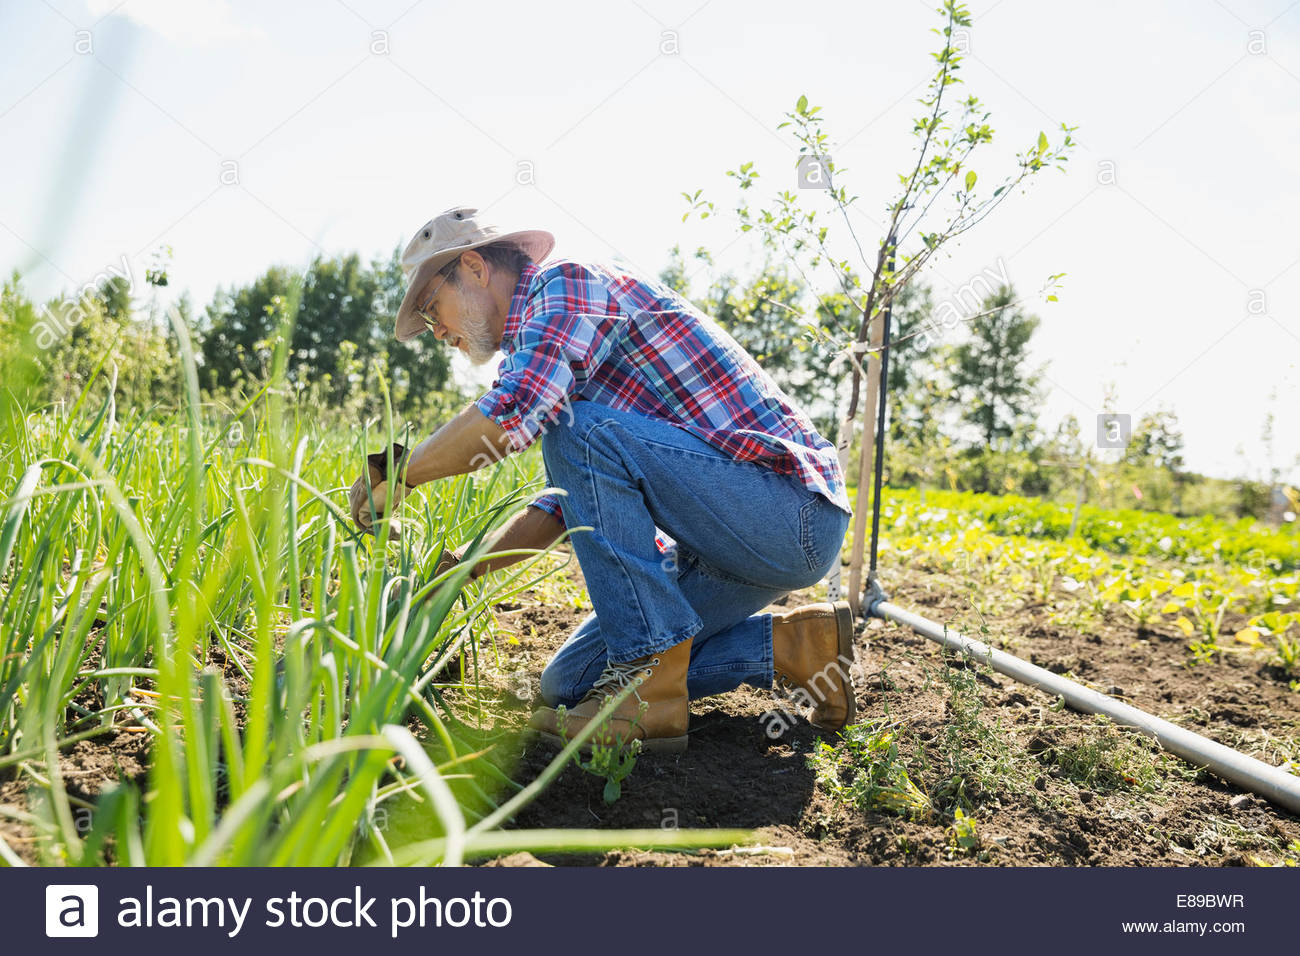 Farmer tending to plants in sunny garden Stock Photo